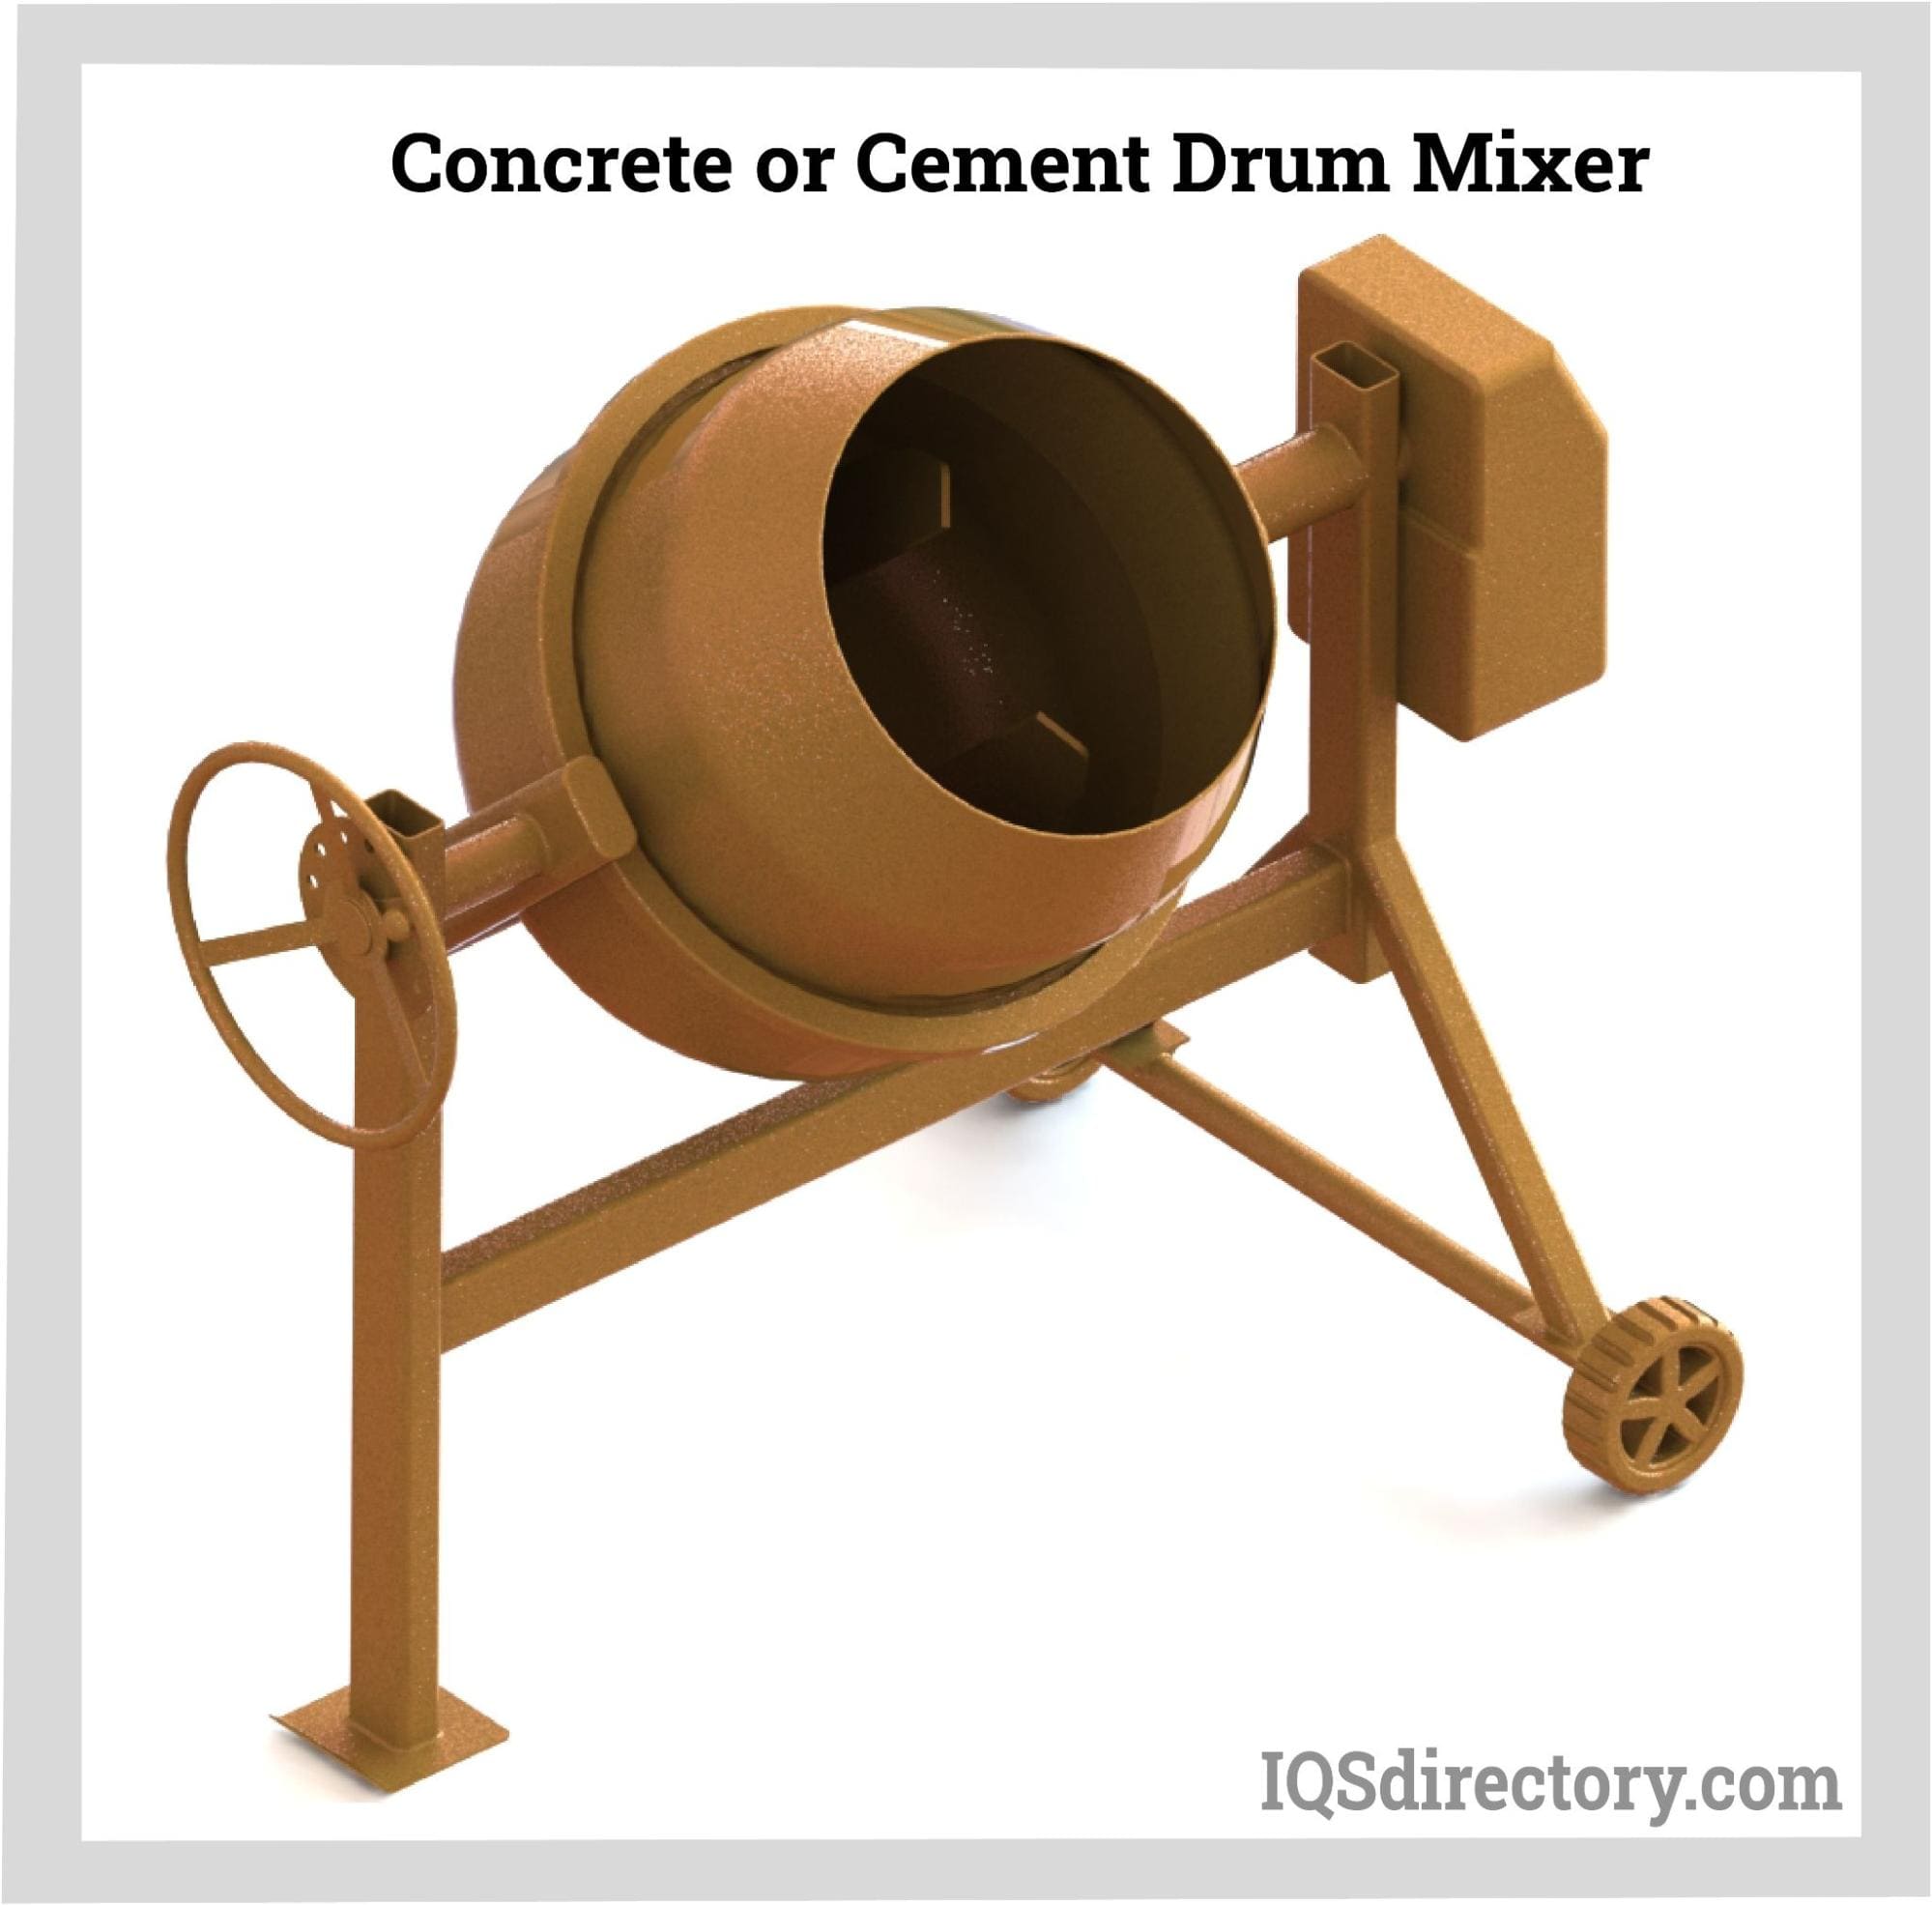 Concrete or Cement Drum Mixer